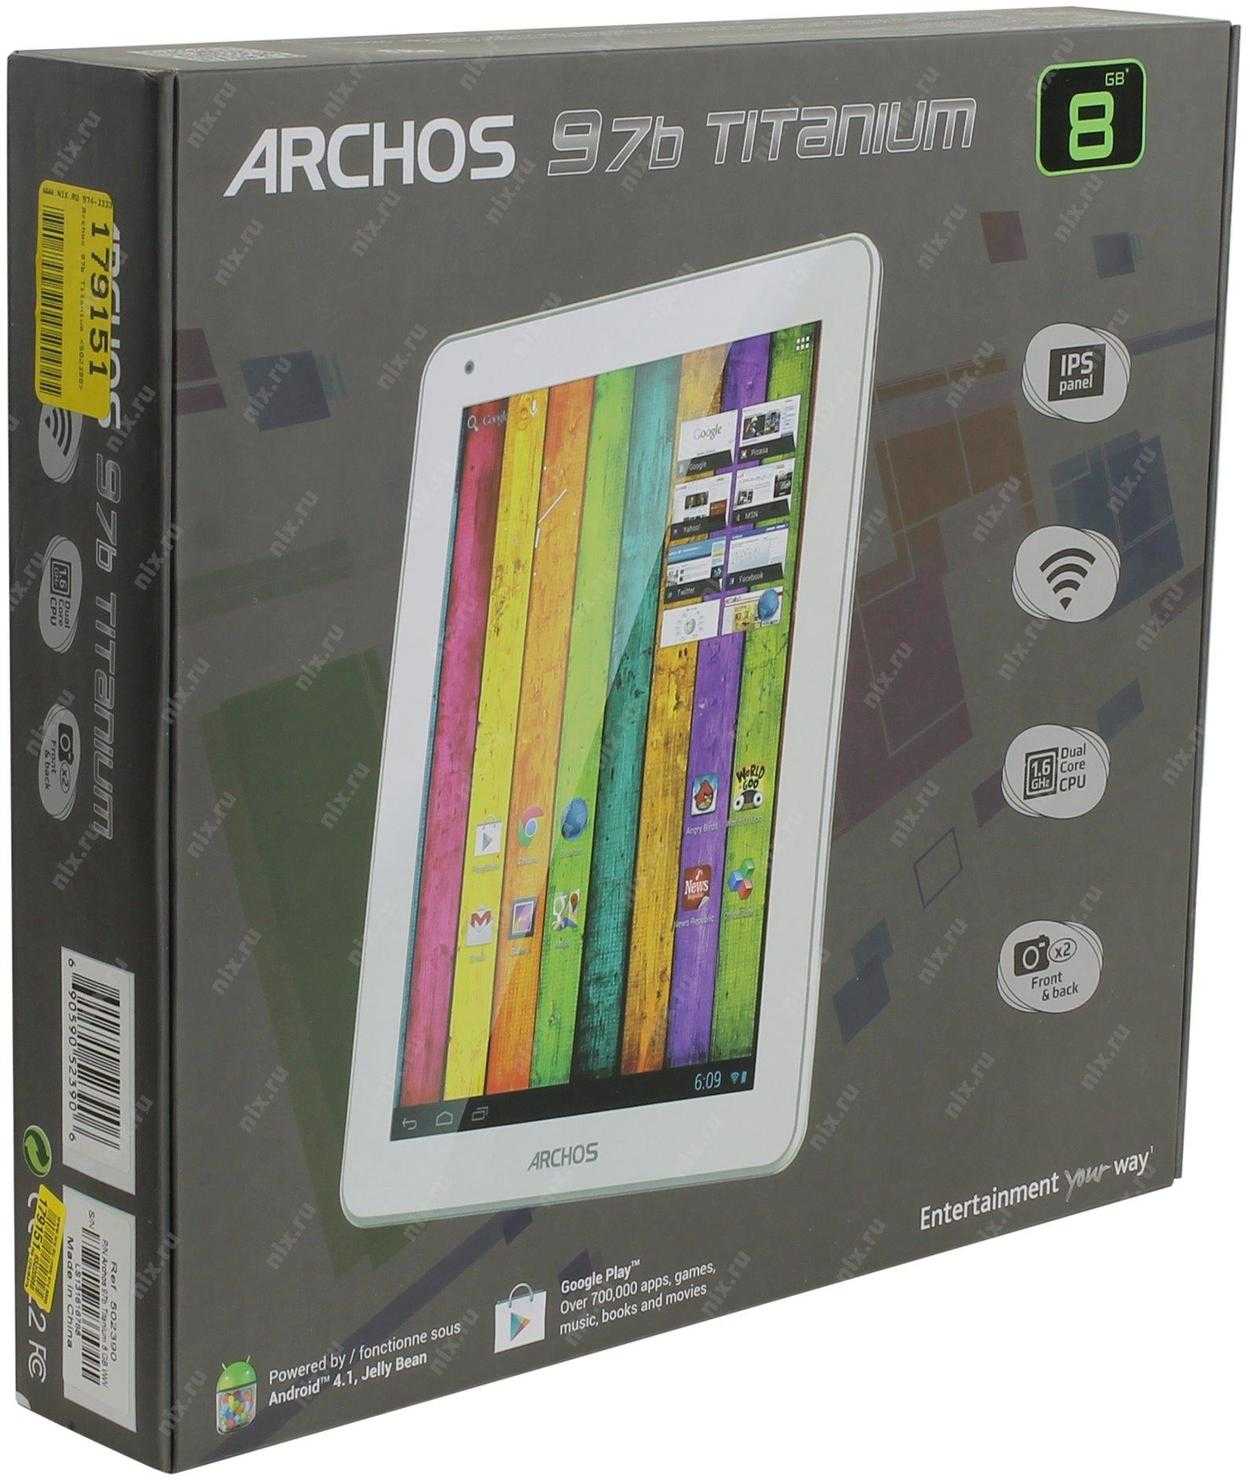 Планшет archos 97 titanium hd 8 гб wifi серебристый